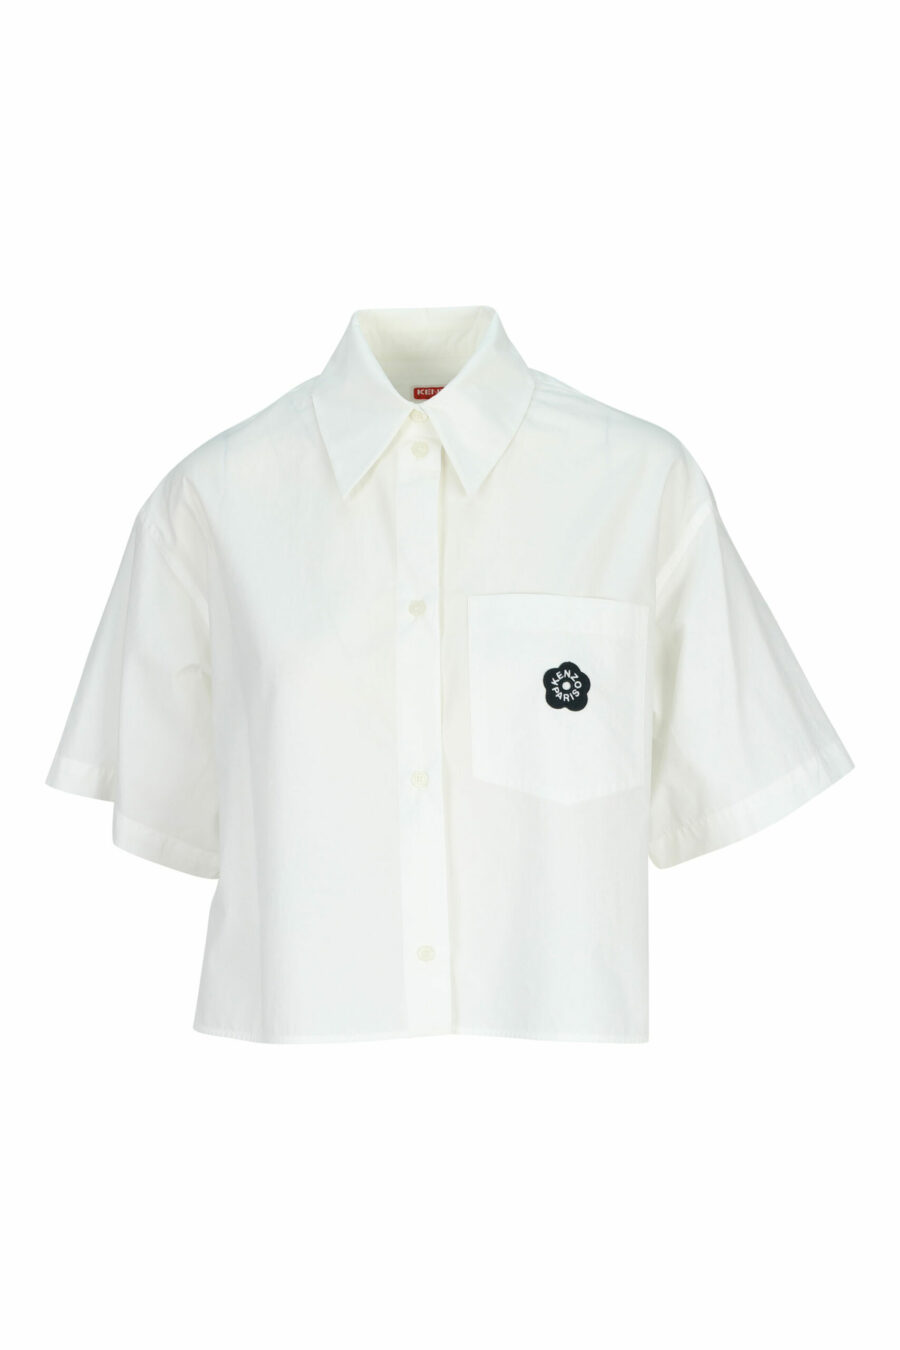 Camisa branca de manga curta com mini logótipo "boke flower" preto - 3612230589063